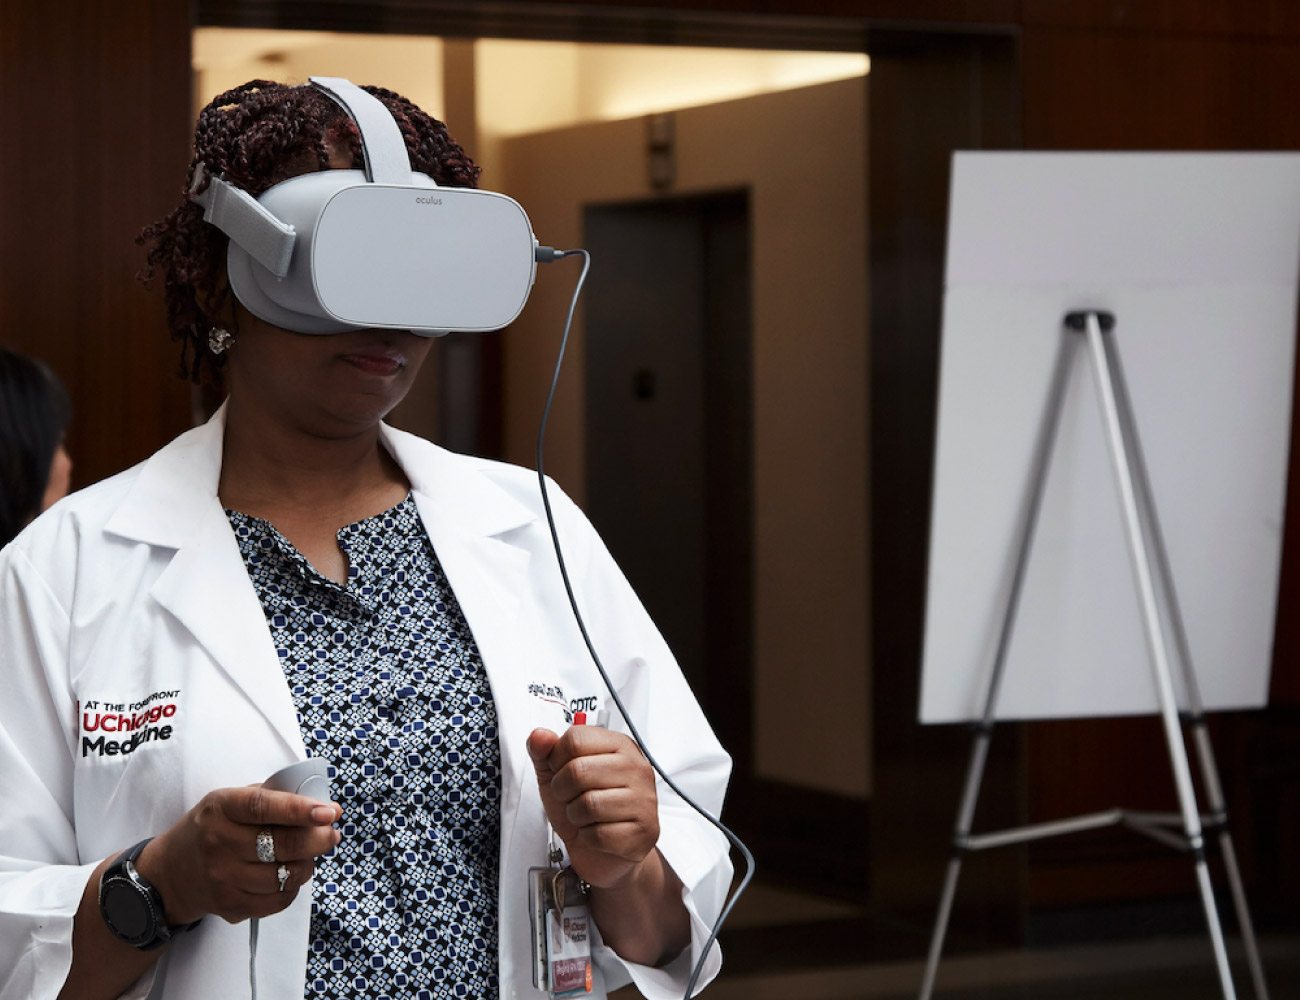 UChicago medical professional using virtual reality headset